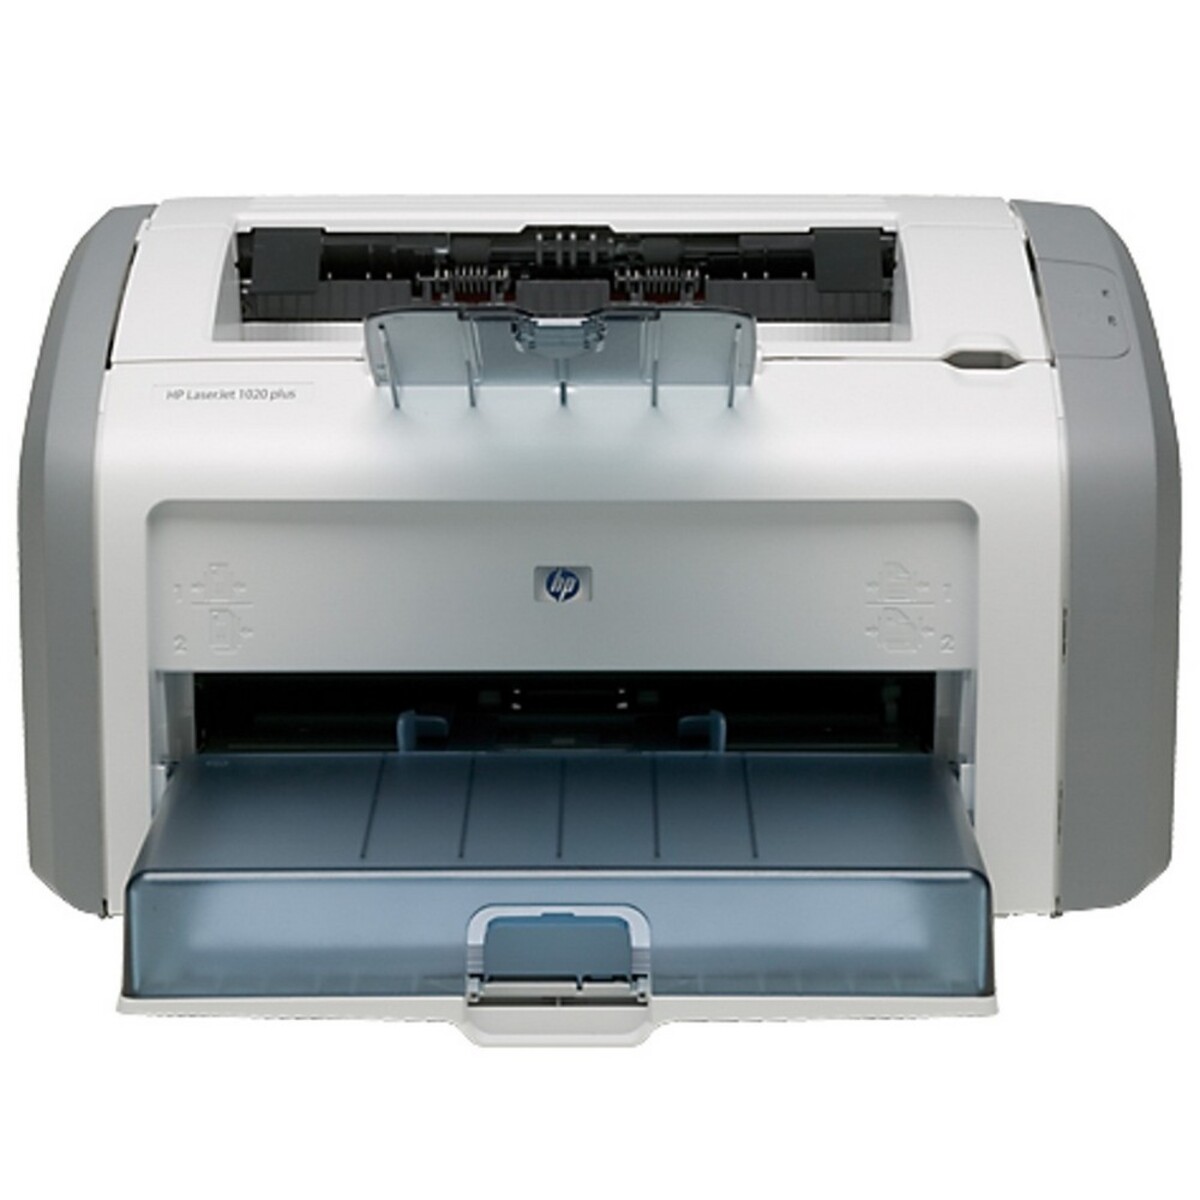 HP LaserJet Printer 1020 Plus